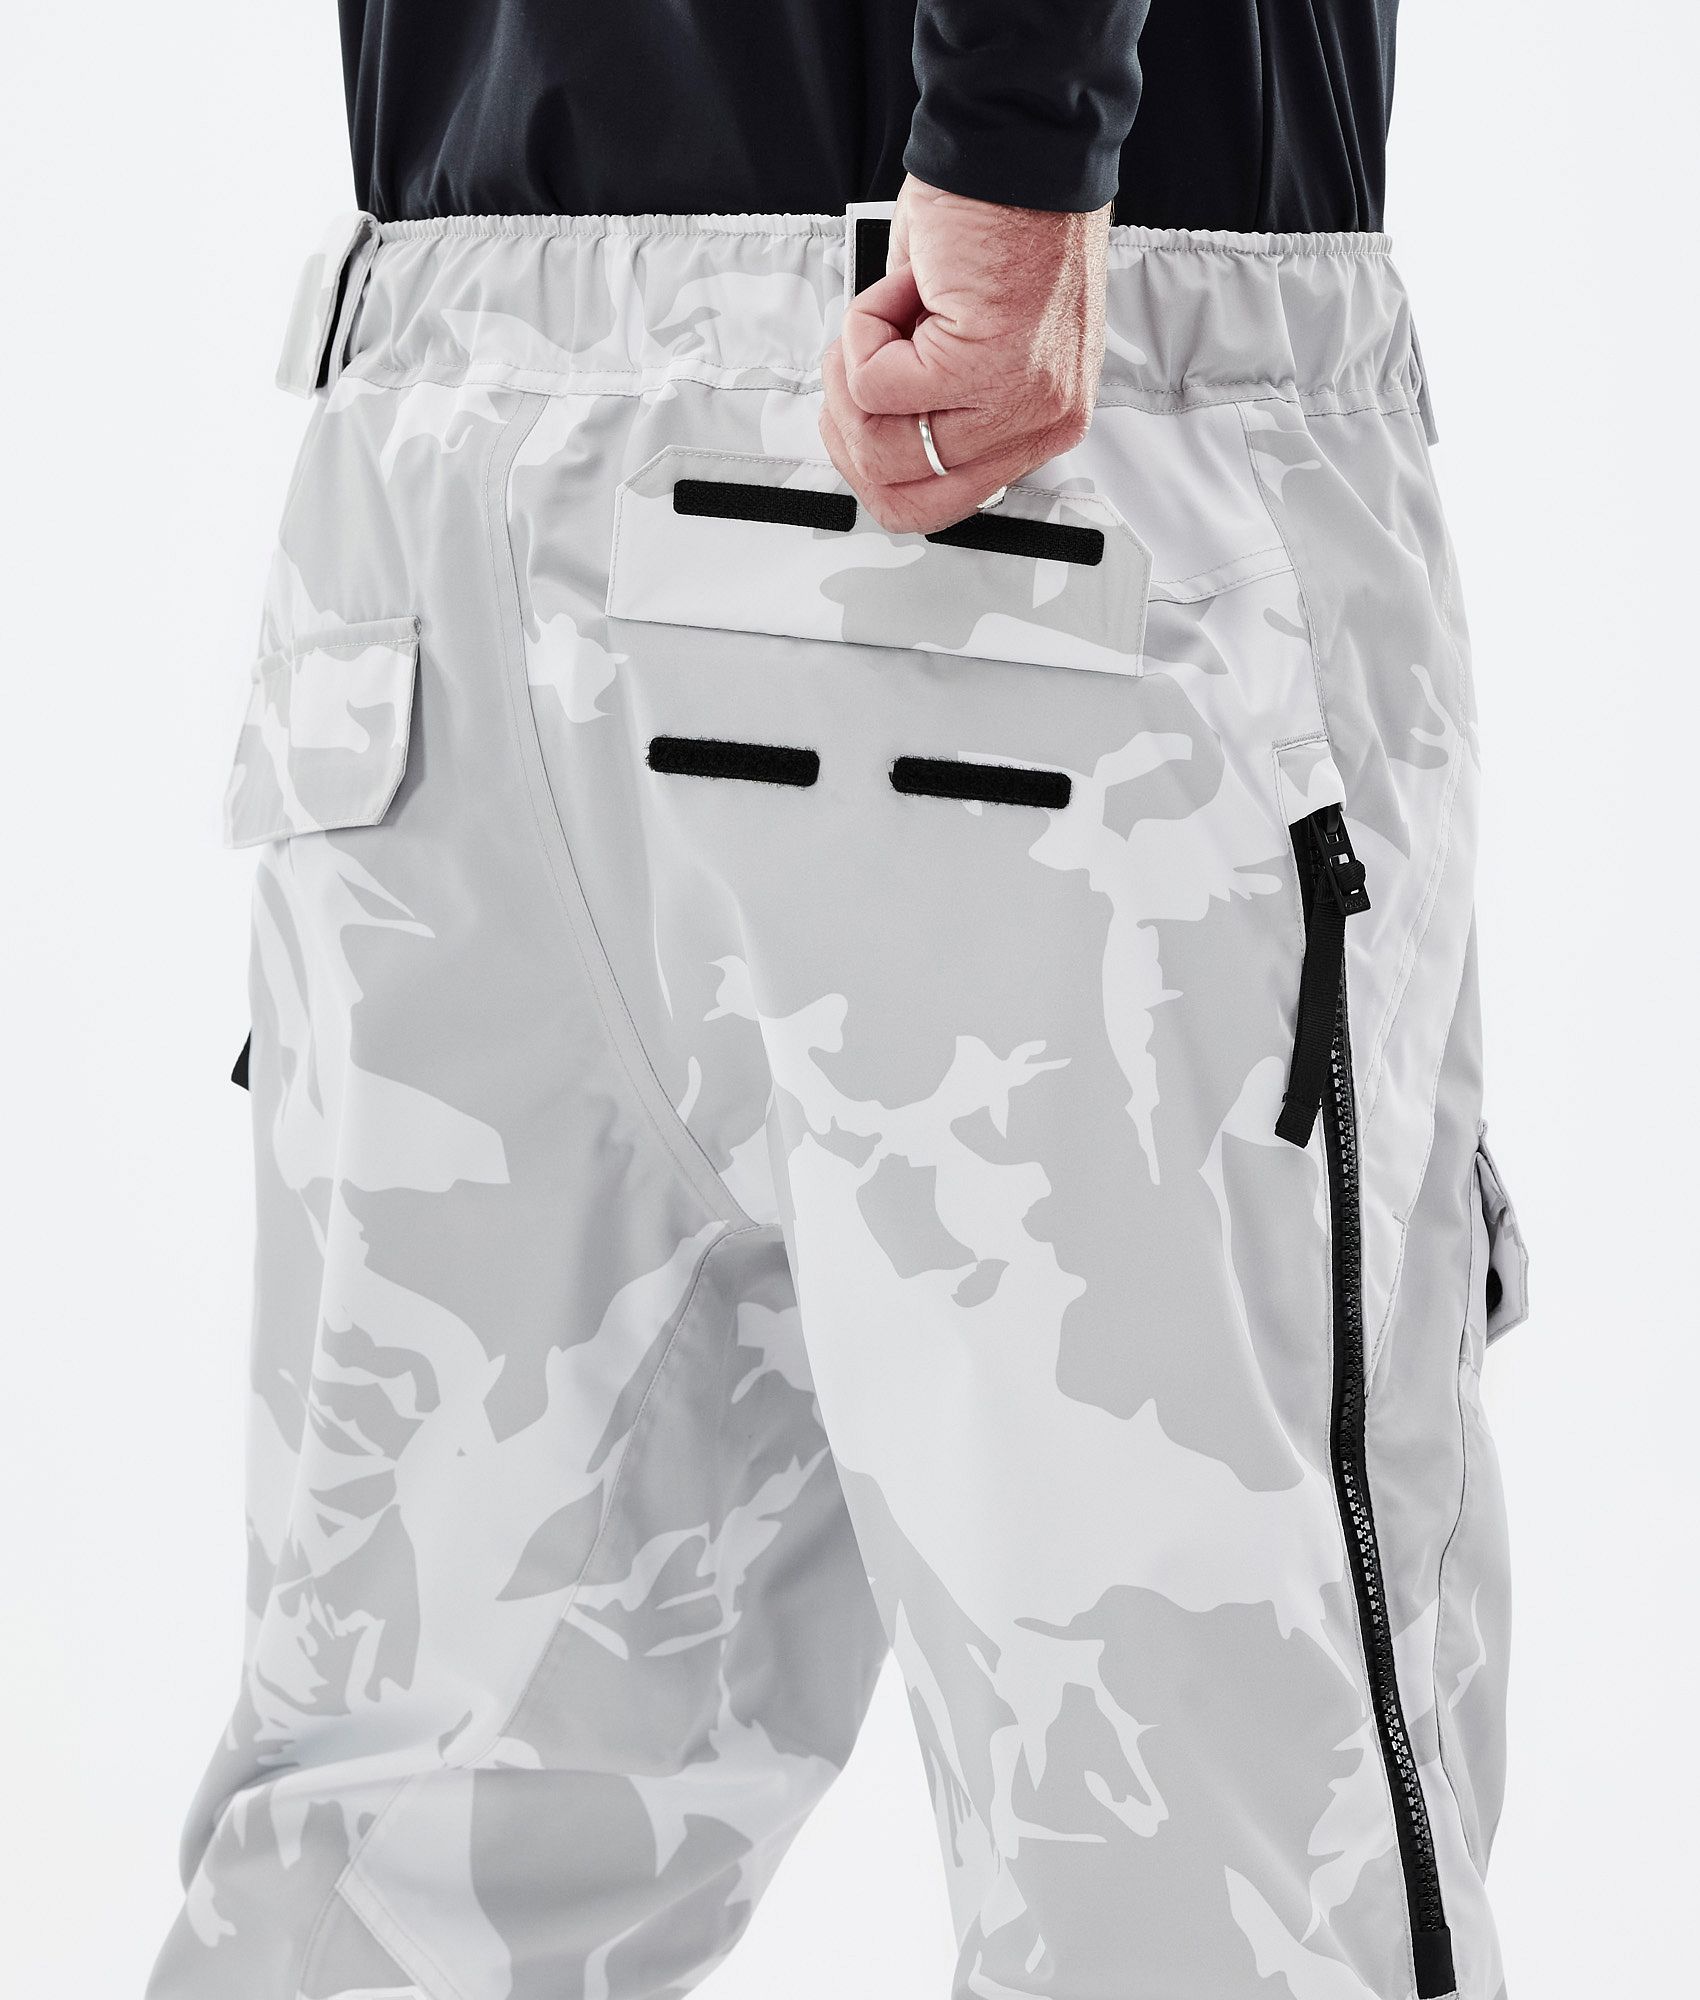 Amazon.com: Rothco 18967 Color Camo Tactical BDU Pants Size : 3XL (47